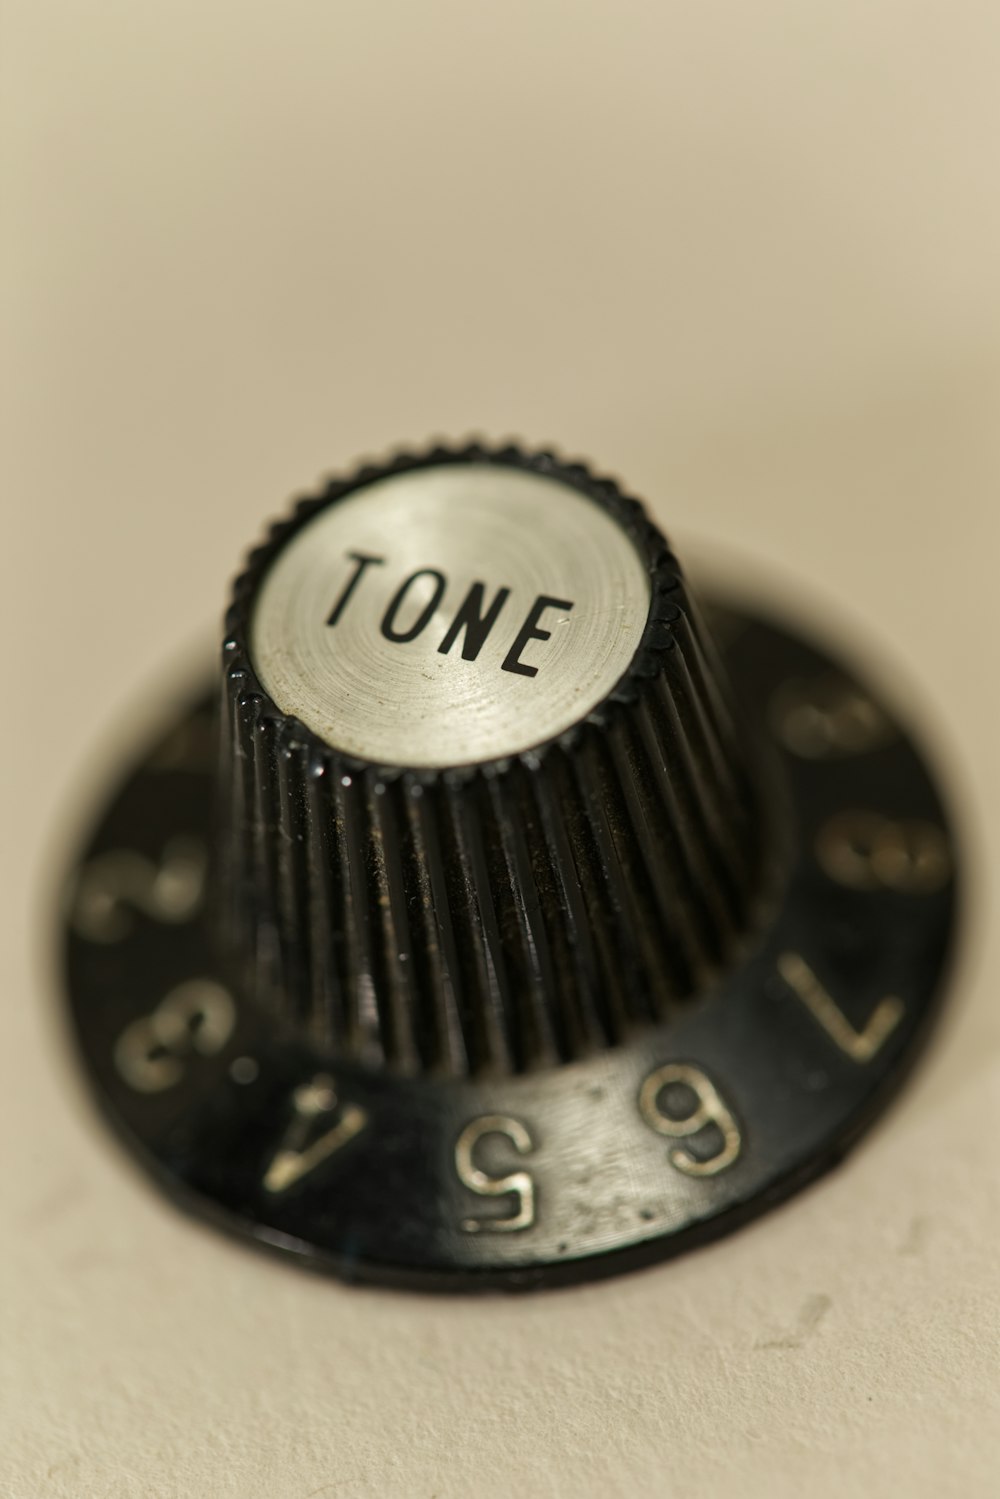 Tone control knob on white surface